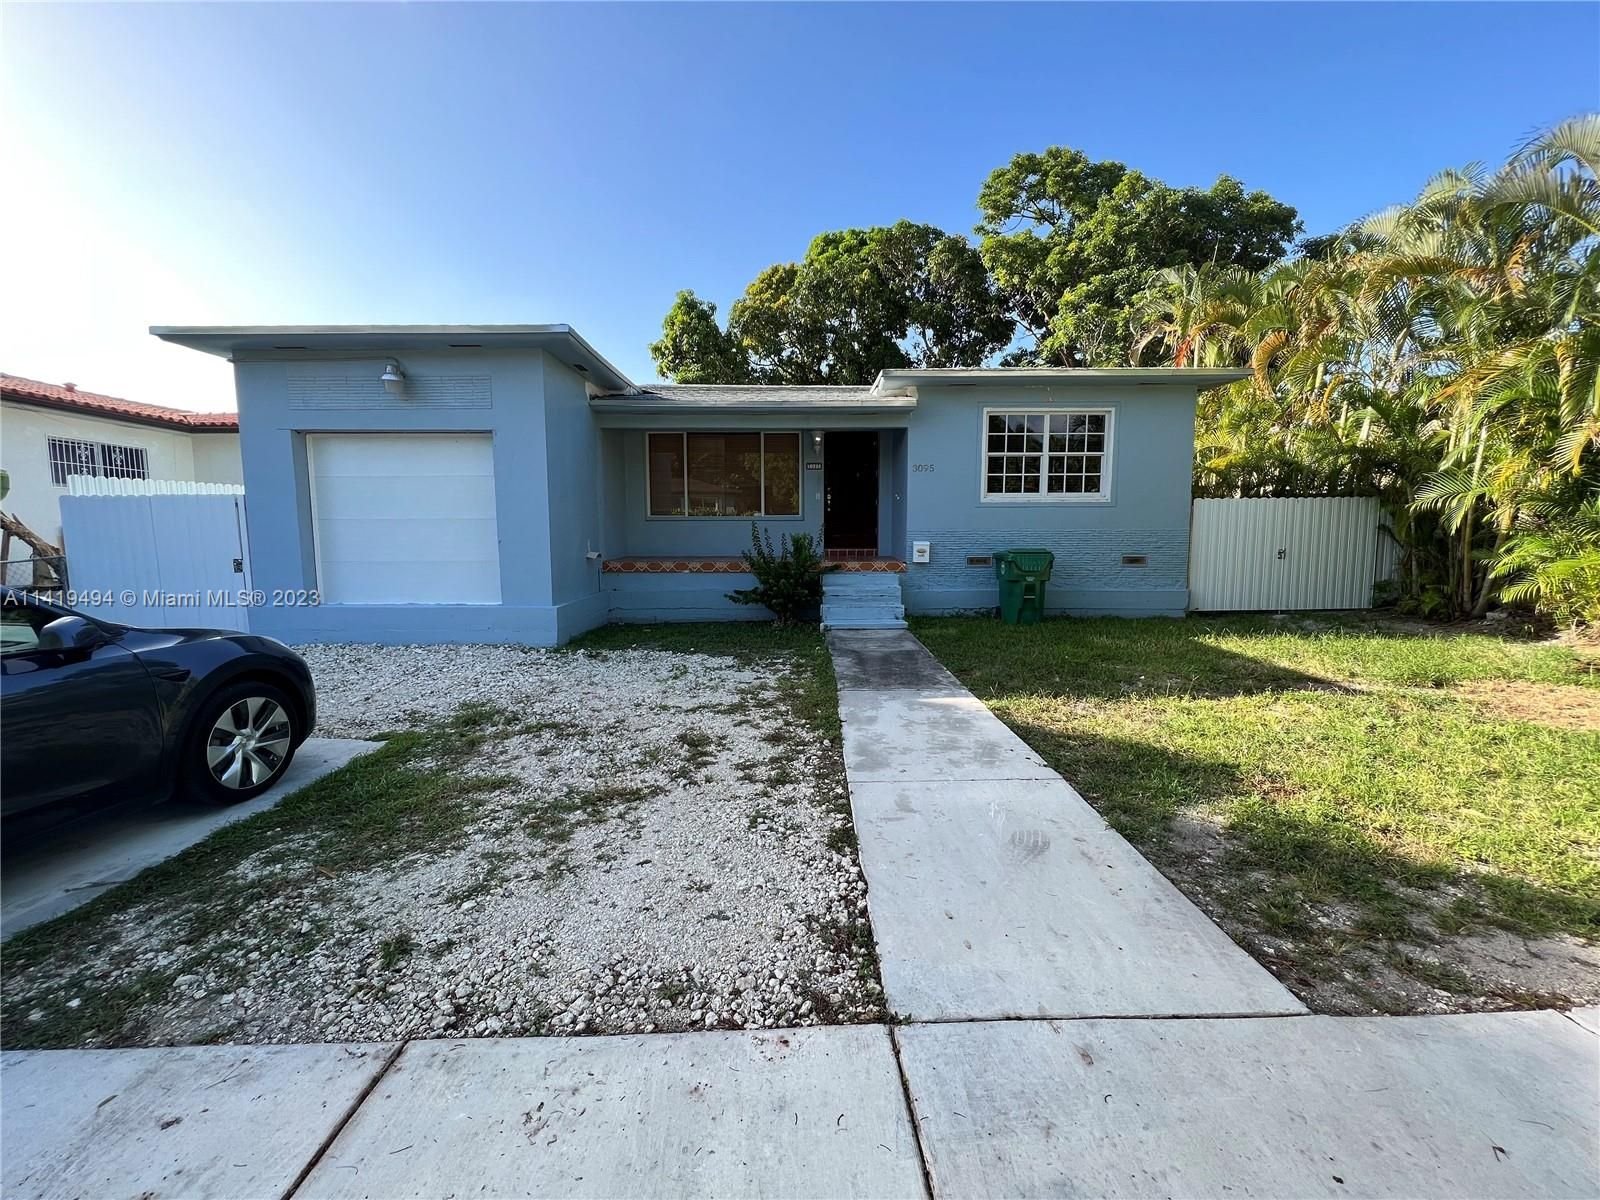 Real estate property located at 3095 5th St, Miami-Dade County, Miami, FL